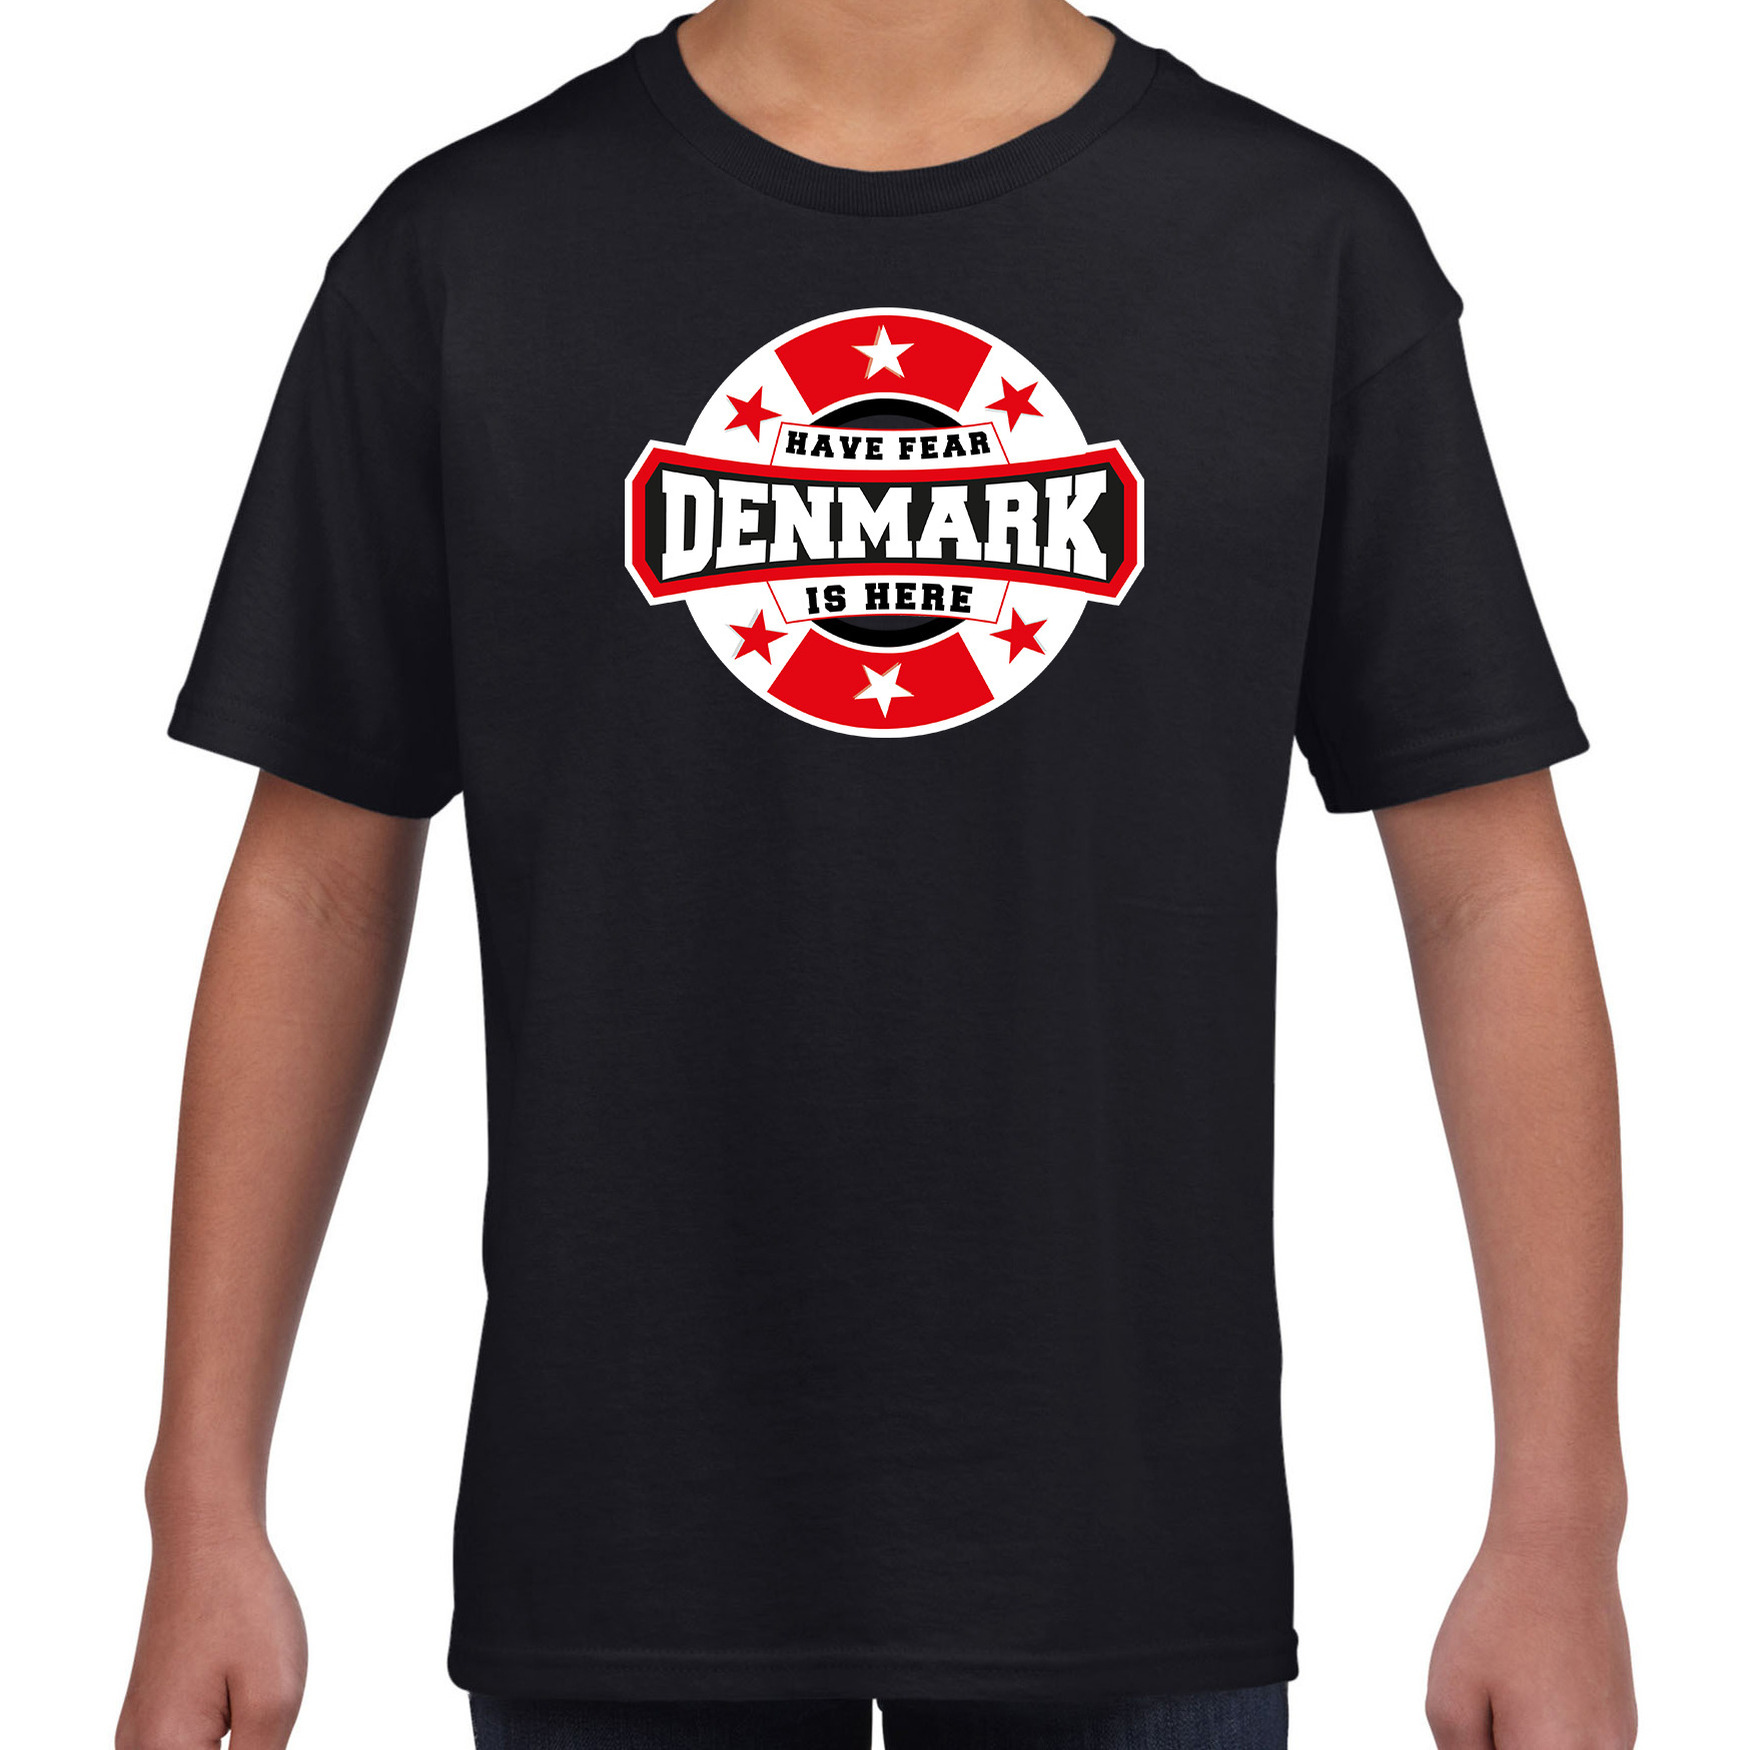 Have fear Denmark is here-Denemarken supporter t-shirt zwart voor kids